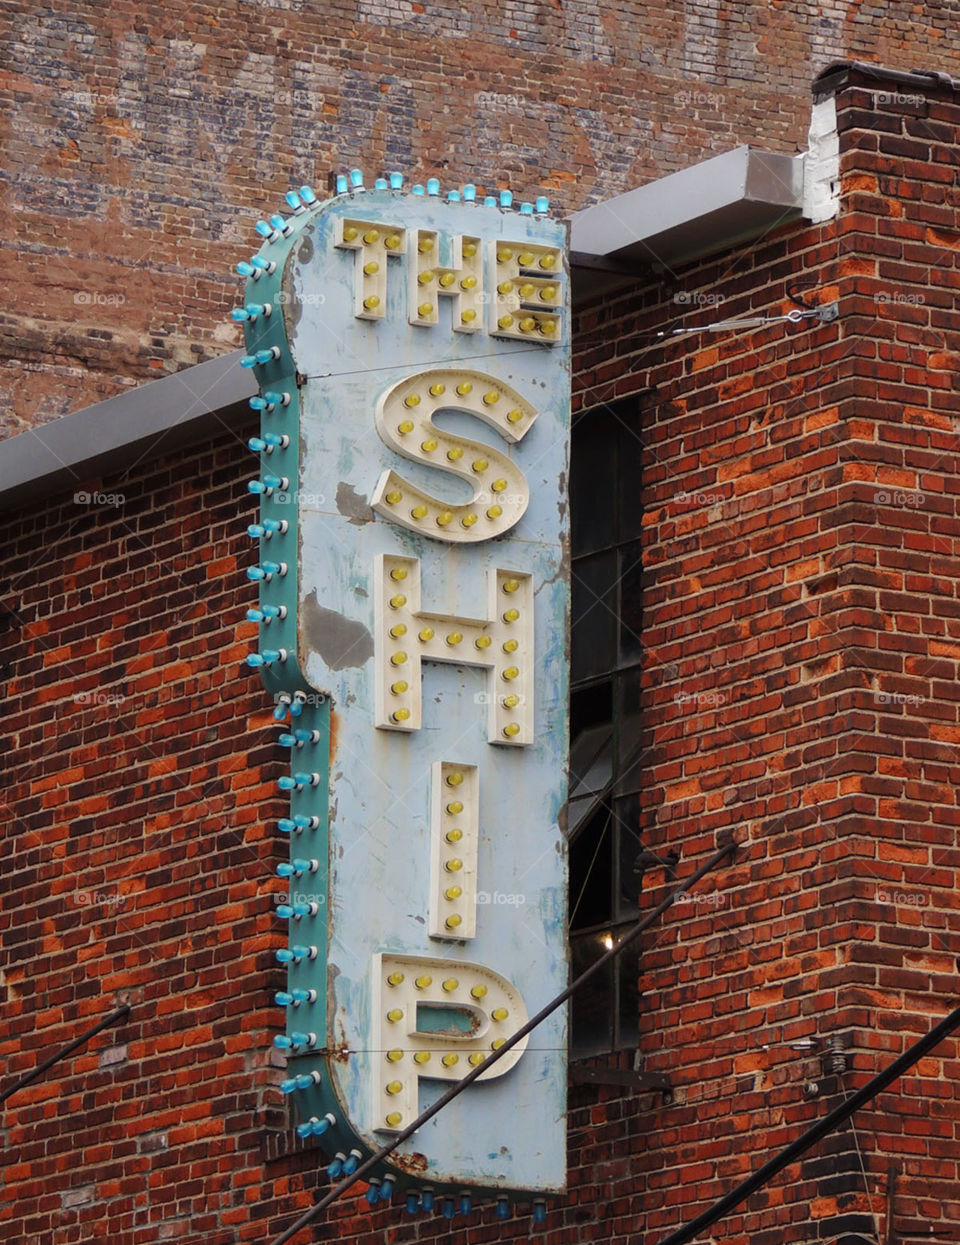 The Ship Restaurant Sign